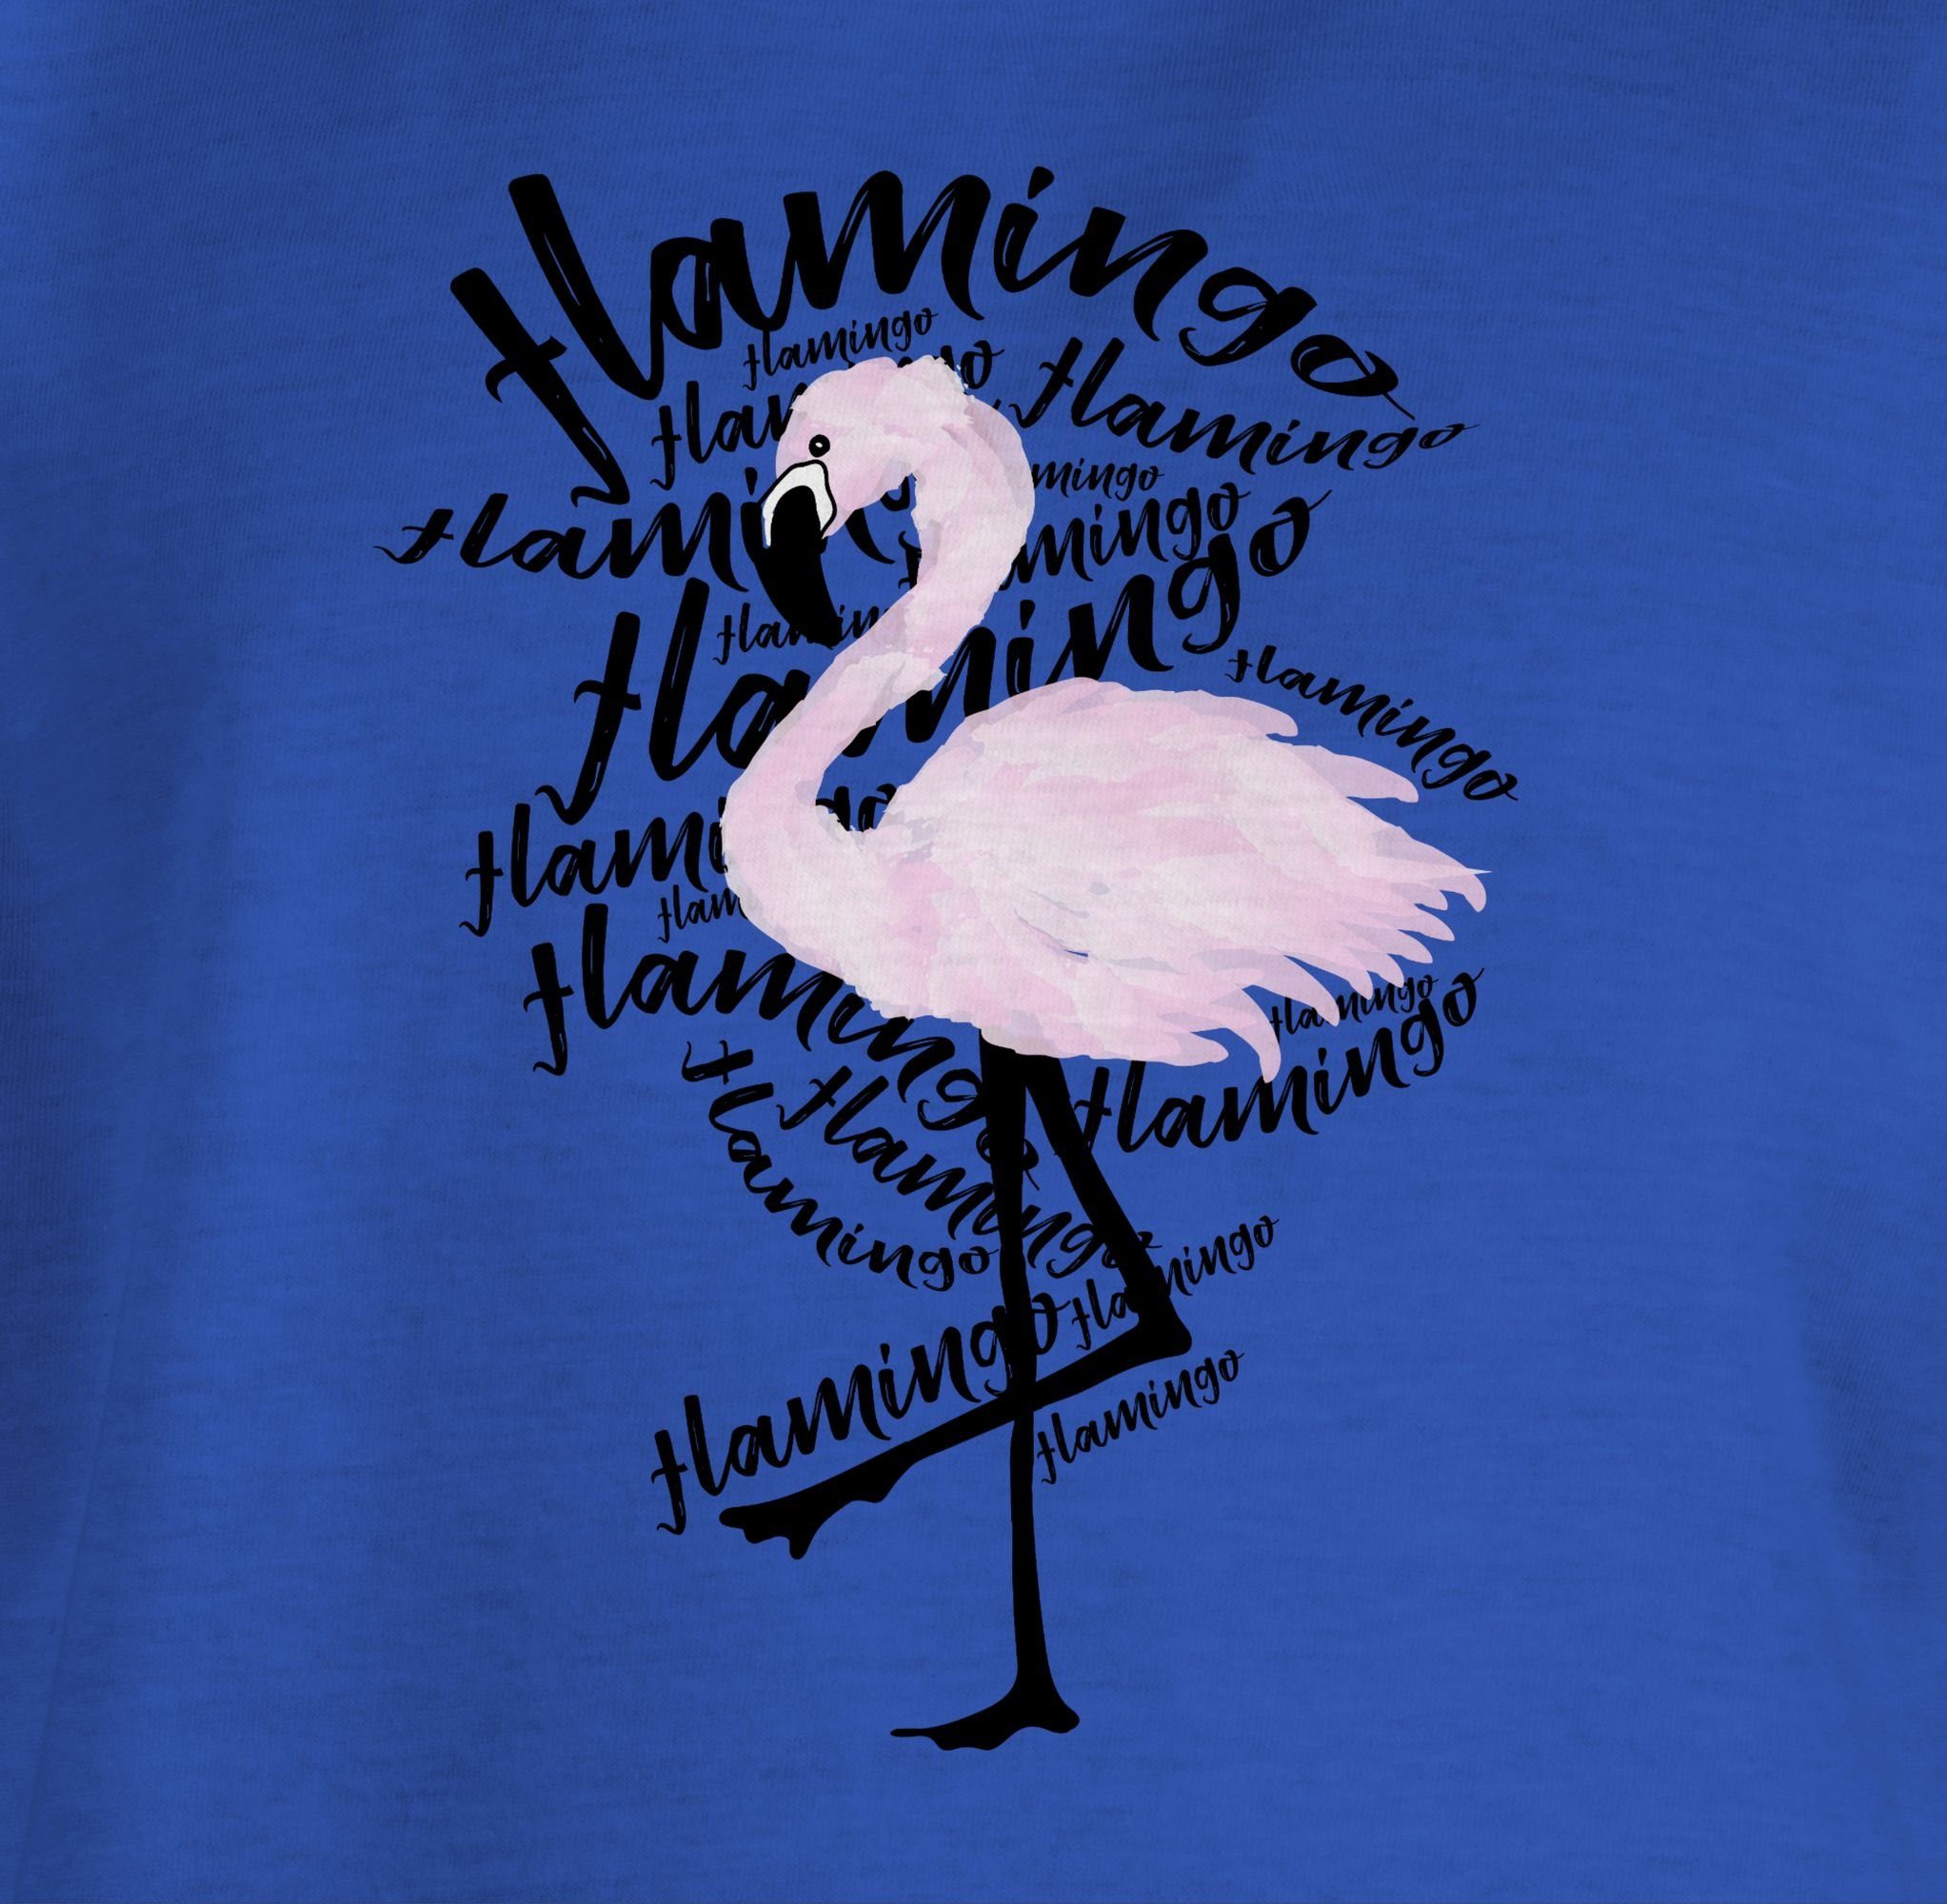 3 Animal Shirtracer T-Shirt Royalblau Print Tiermotiv Flamingo